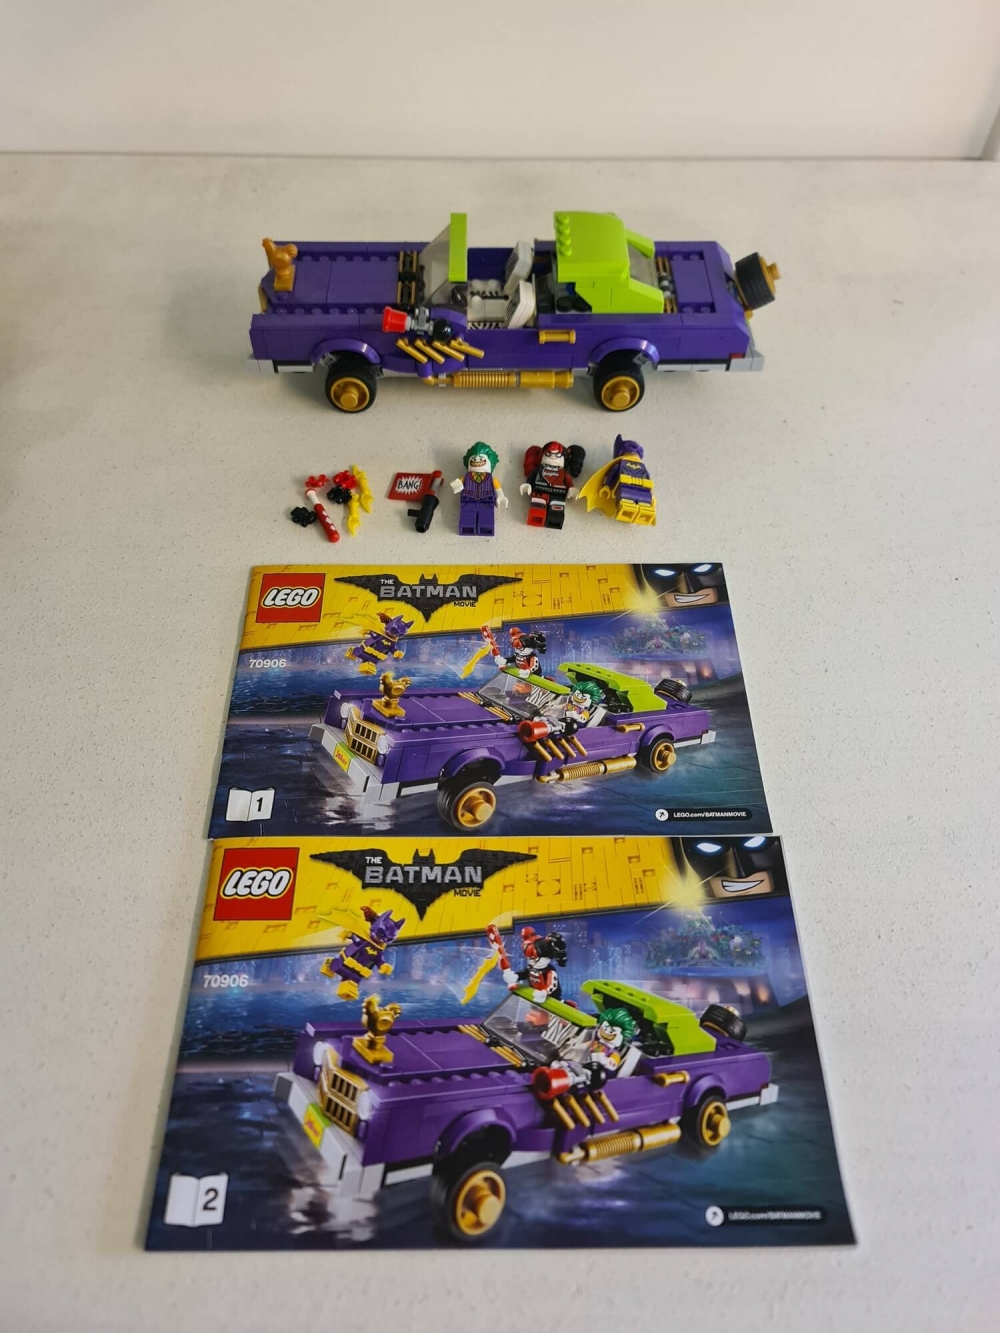 Sett 70906 fra Lego Super Heroes : The Lego Batman Movie
Som nytt.
Komplett med manual.